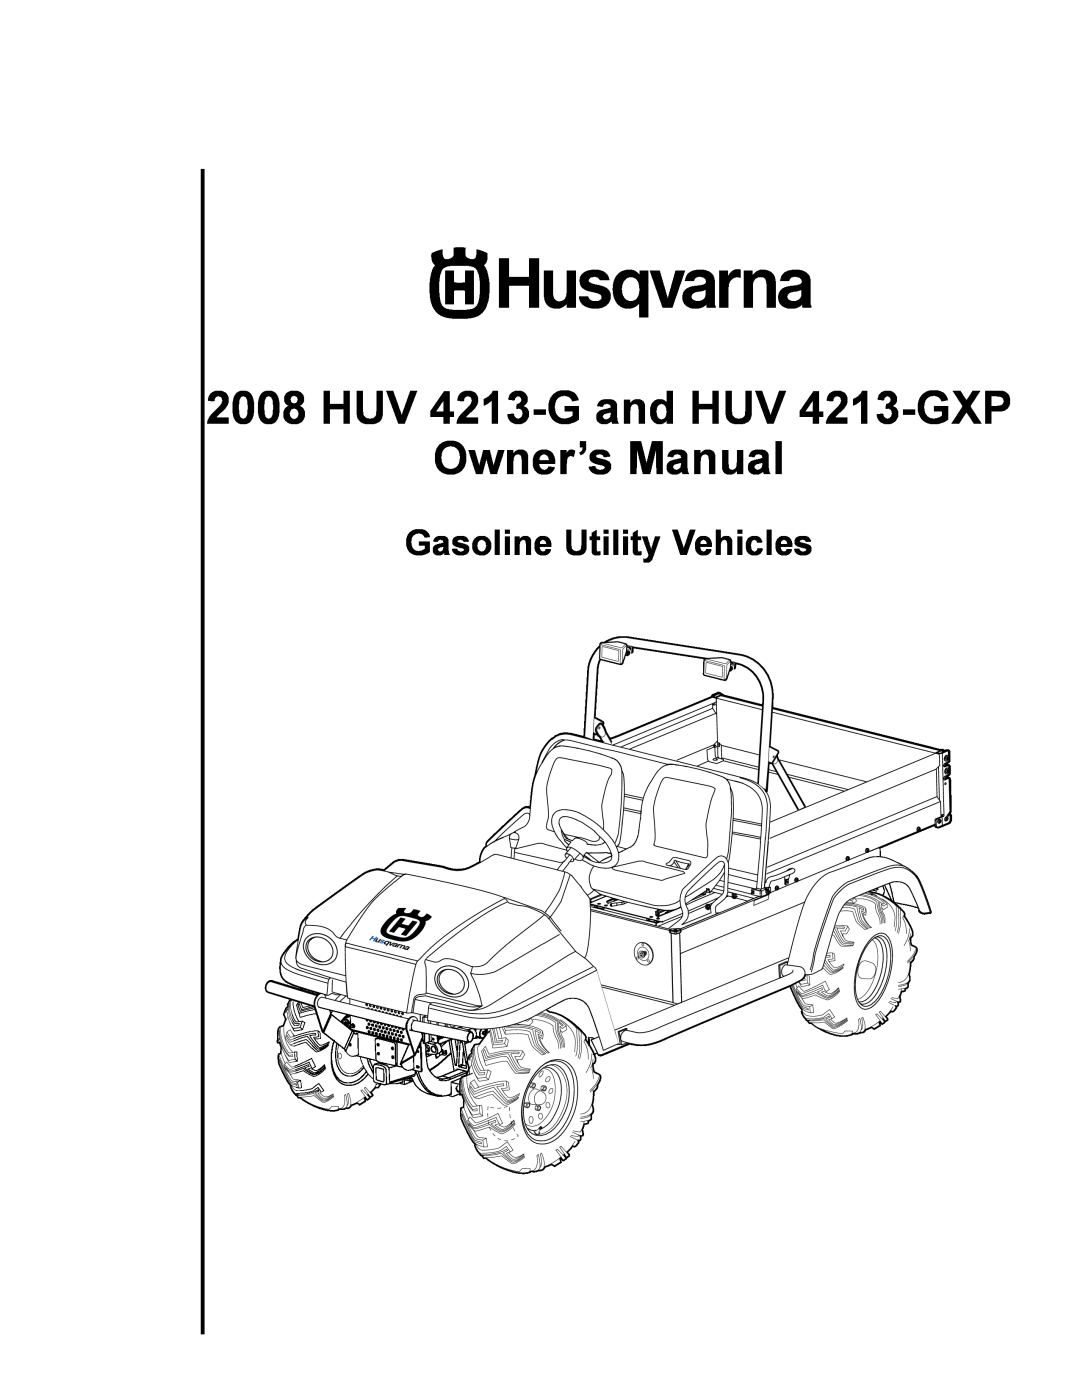 Husqvarna HUV 4213-GXP owner manual Gasoline Utility Vehicles 